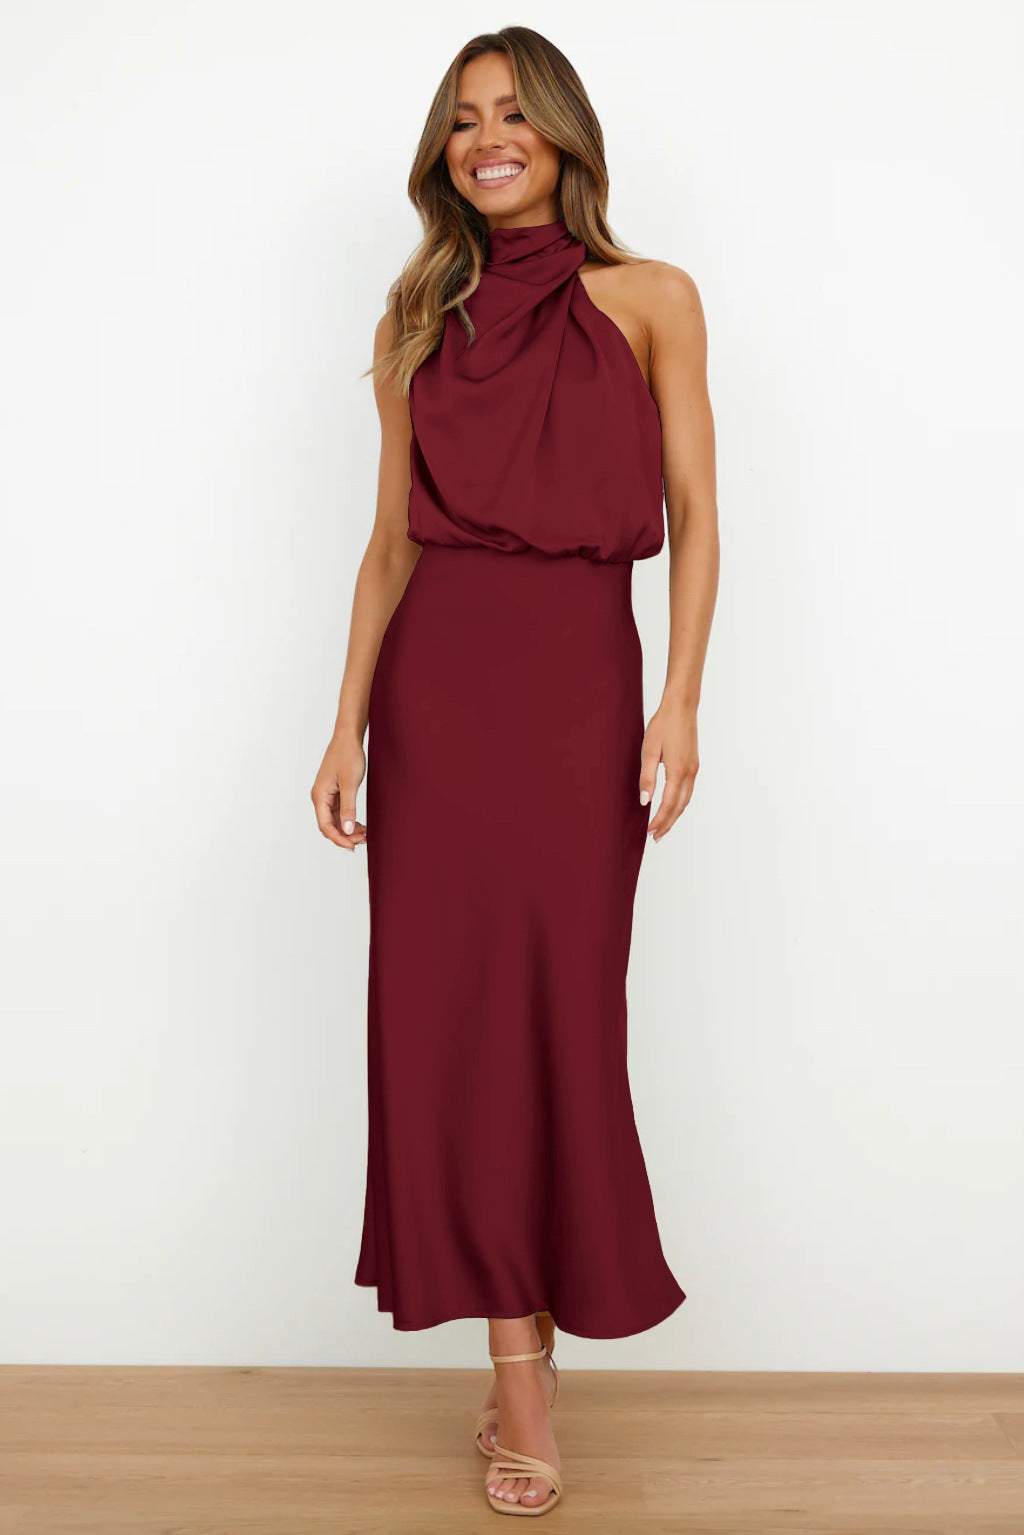 Evelyn™ | Elegant sleeveless dress with roll collar 